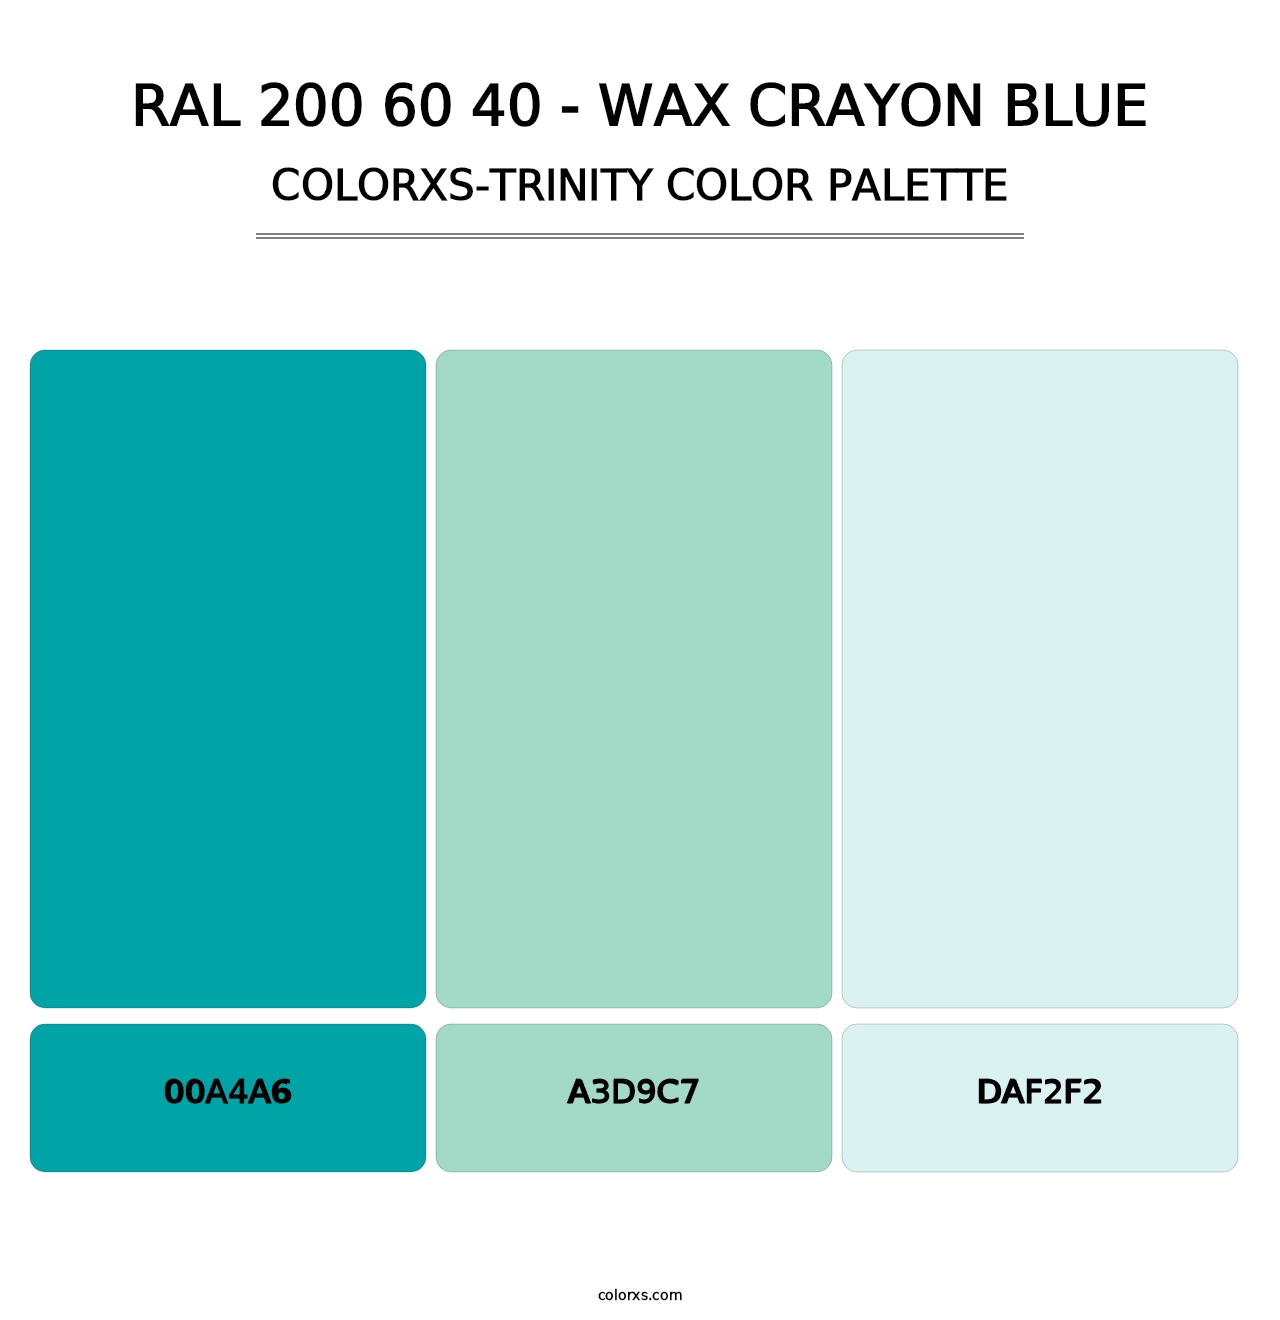 RAL 200 60 40 - Wax Crayon Blue - Colorxs Trinity Palette